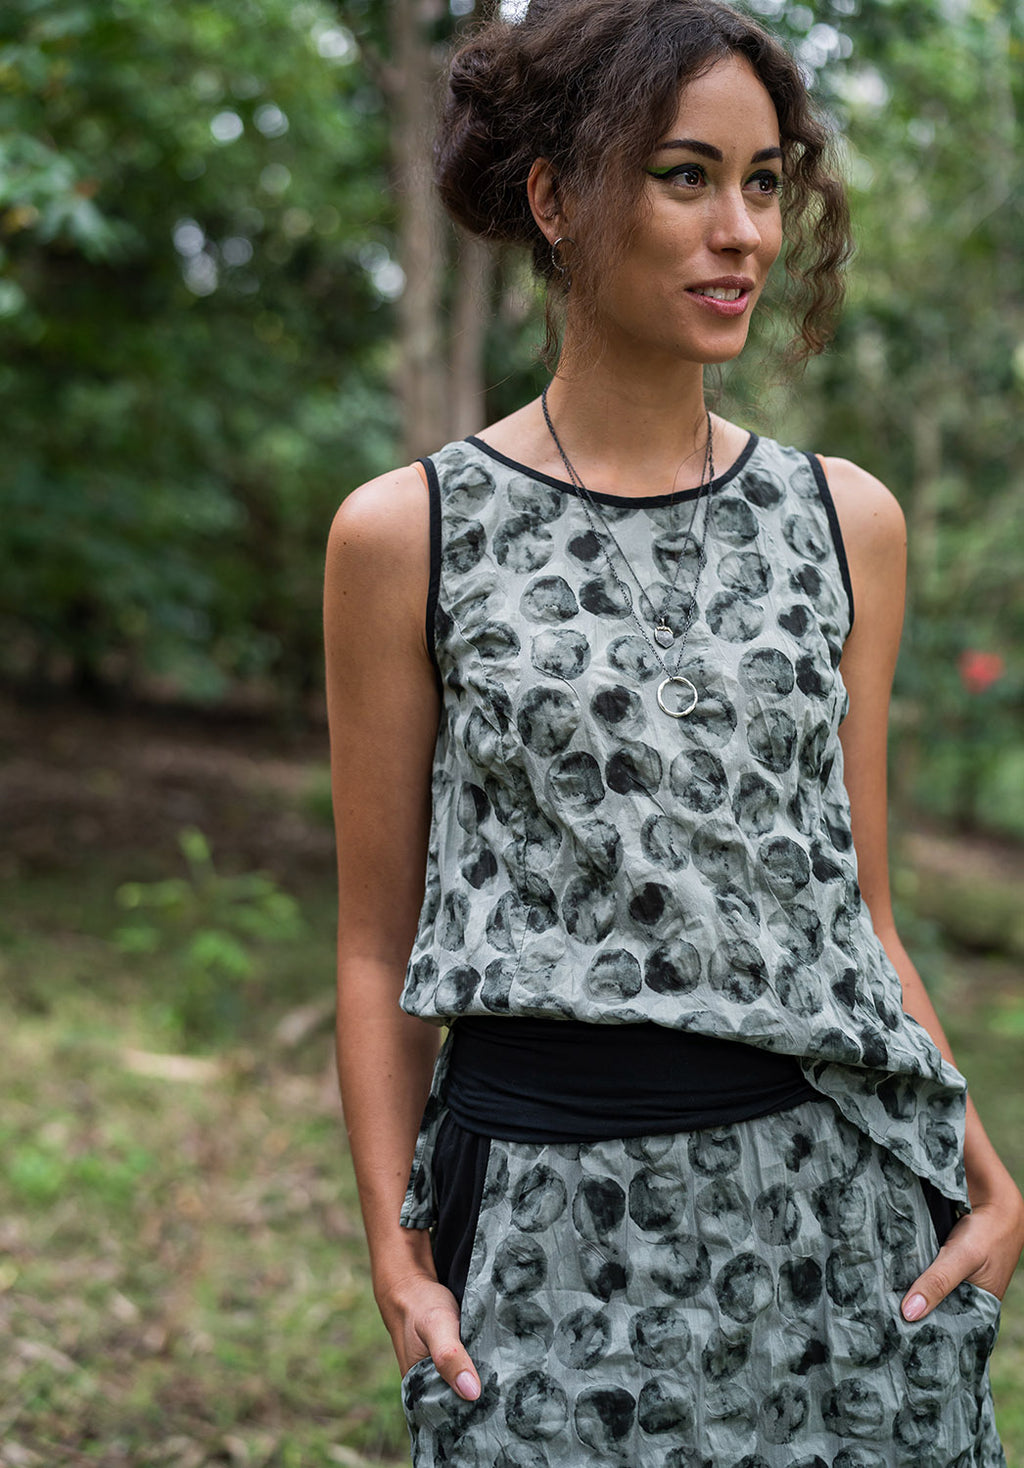 Sustainable Fashion | Australian made clothing, ethical bamboo clothes